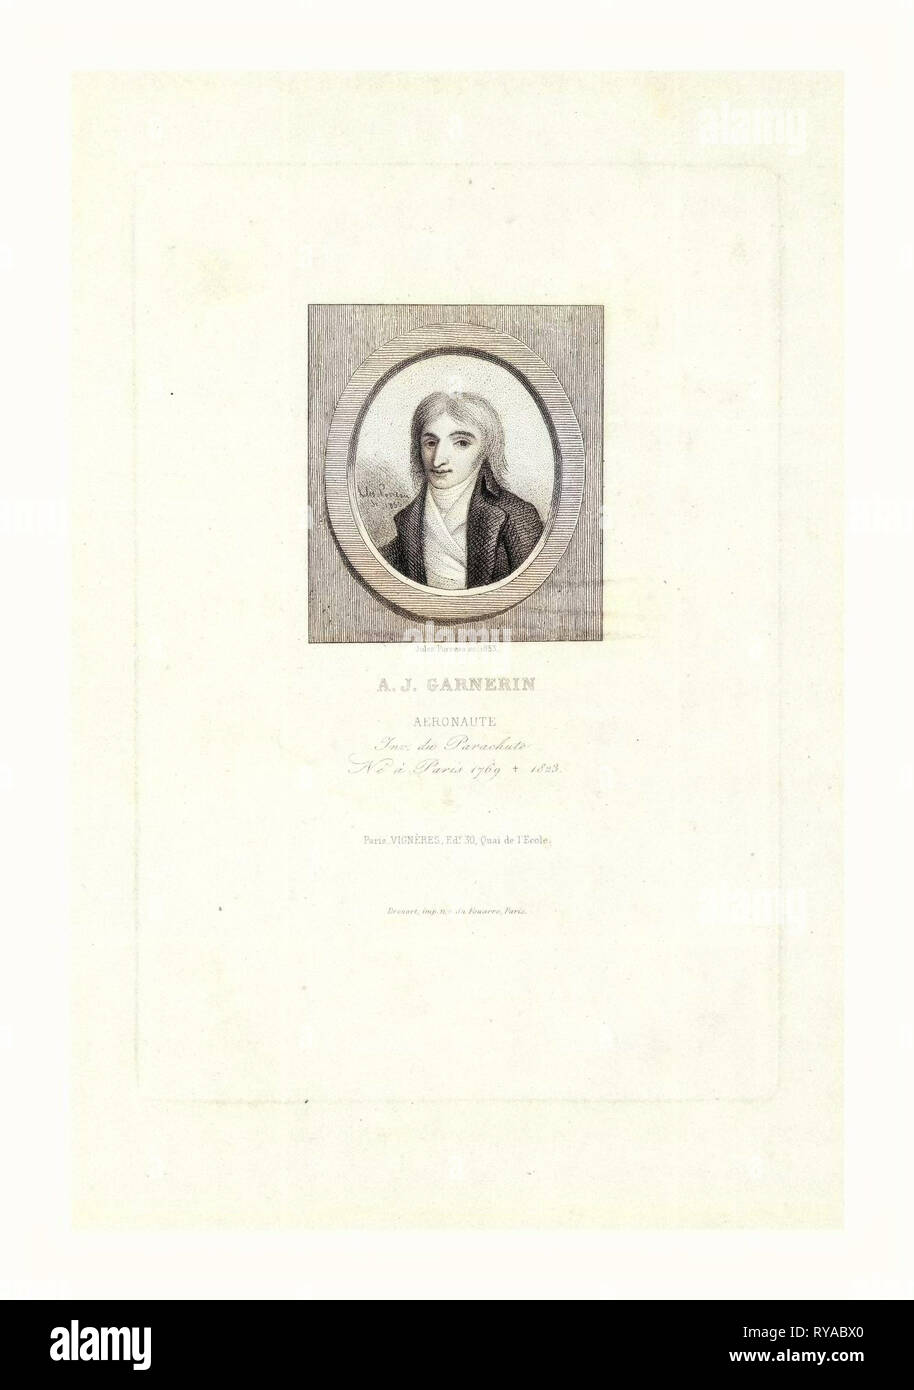 A.J. Garnerin, Aeronaut di Jules Porreau, 1853 Foto Stock